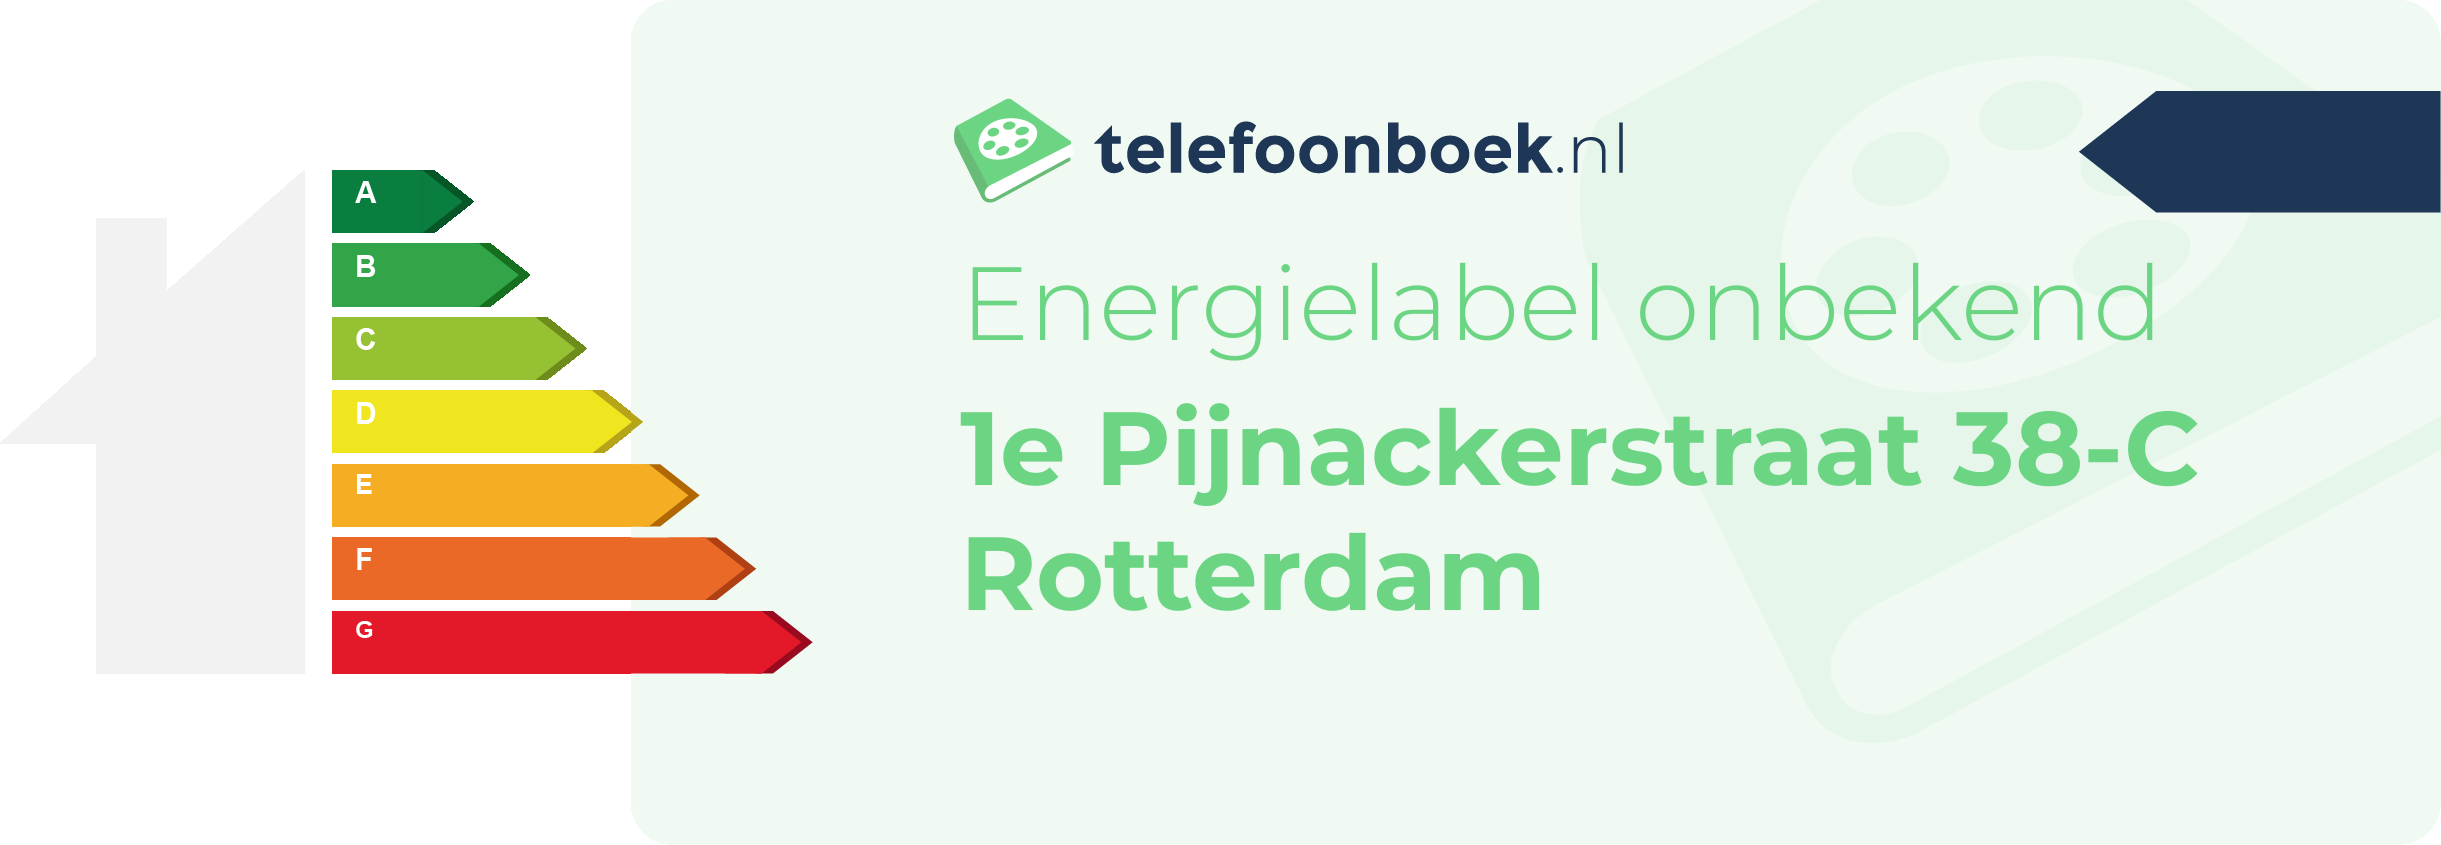 Energielabel 1e Pijnackerstraat 38-C Rotterdam